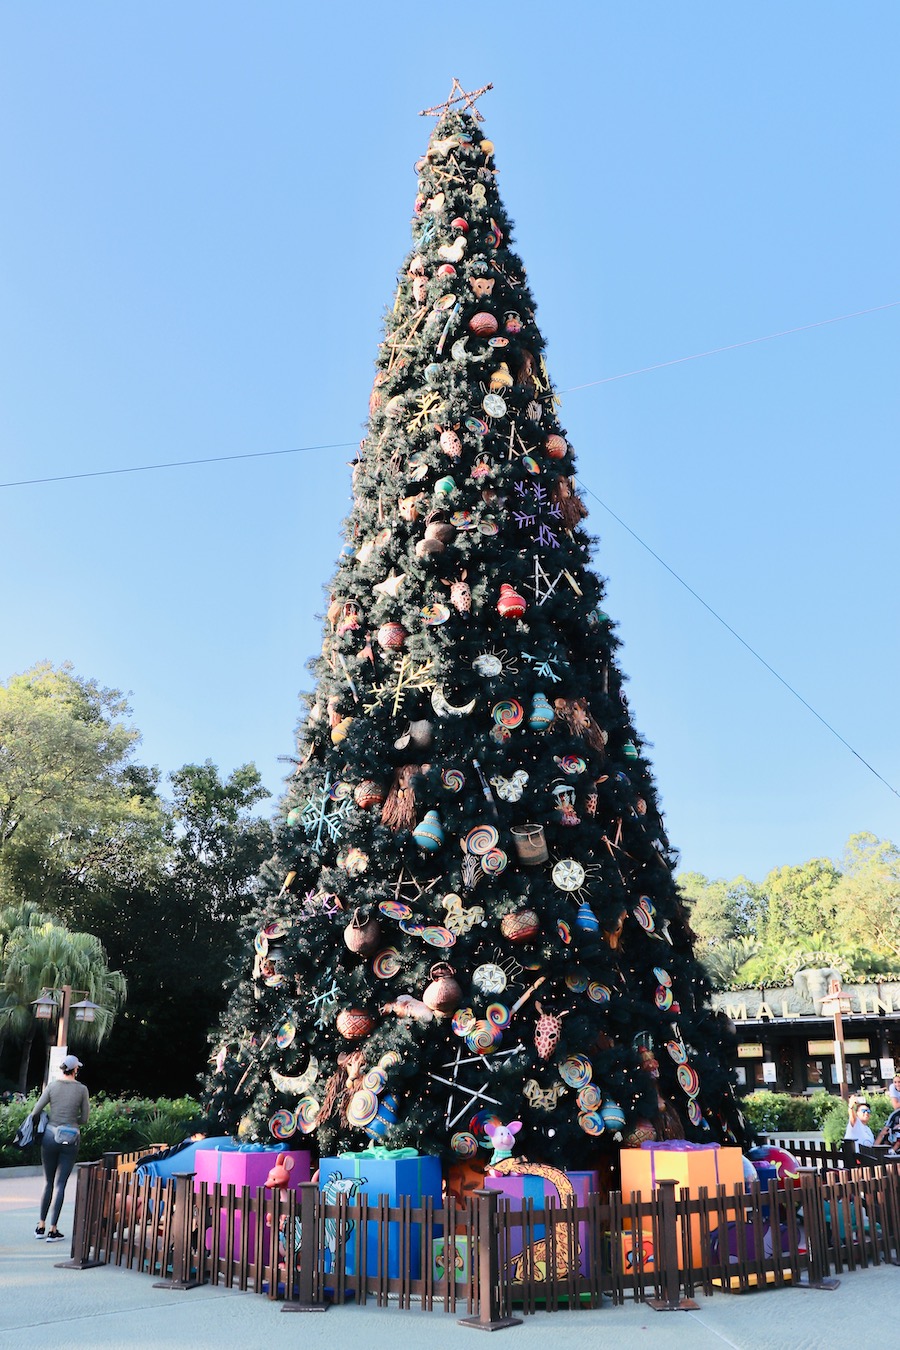 Animal Kingdom's Christmas Tree